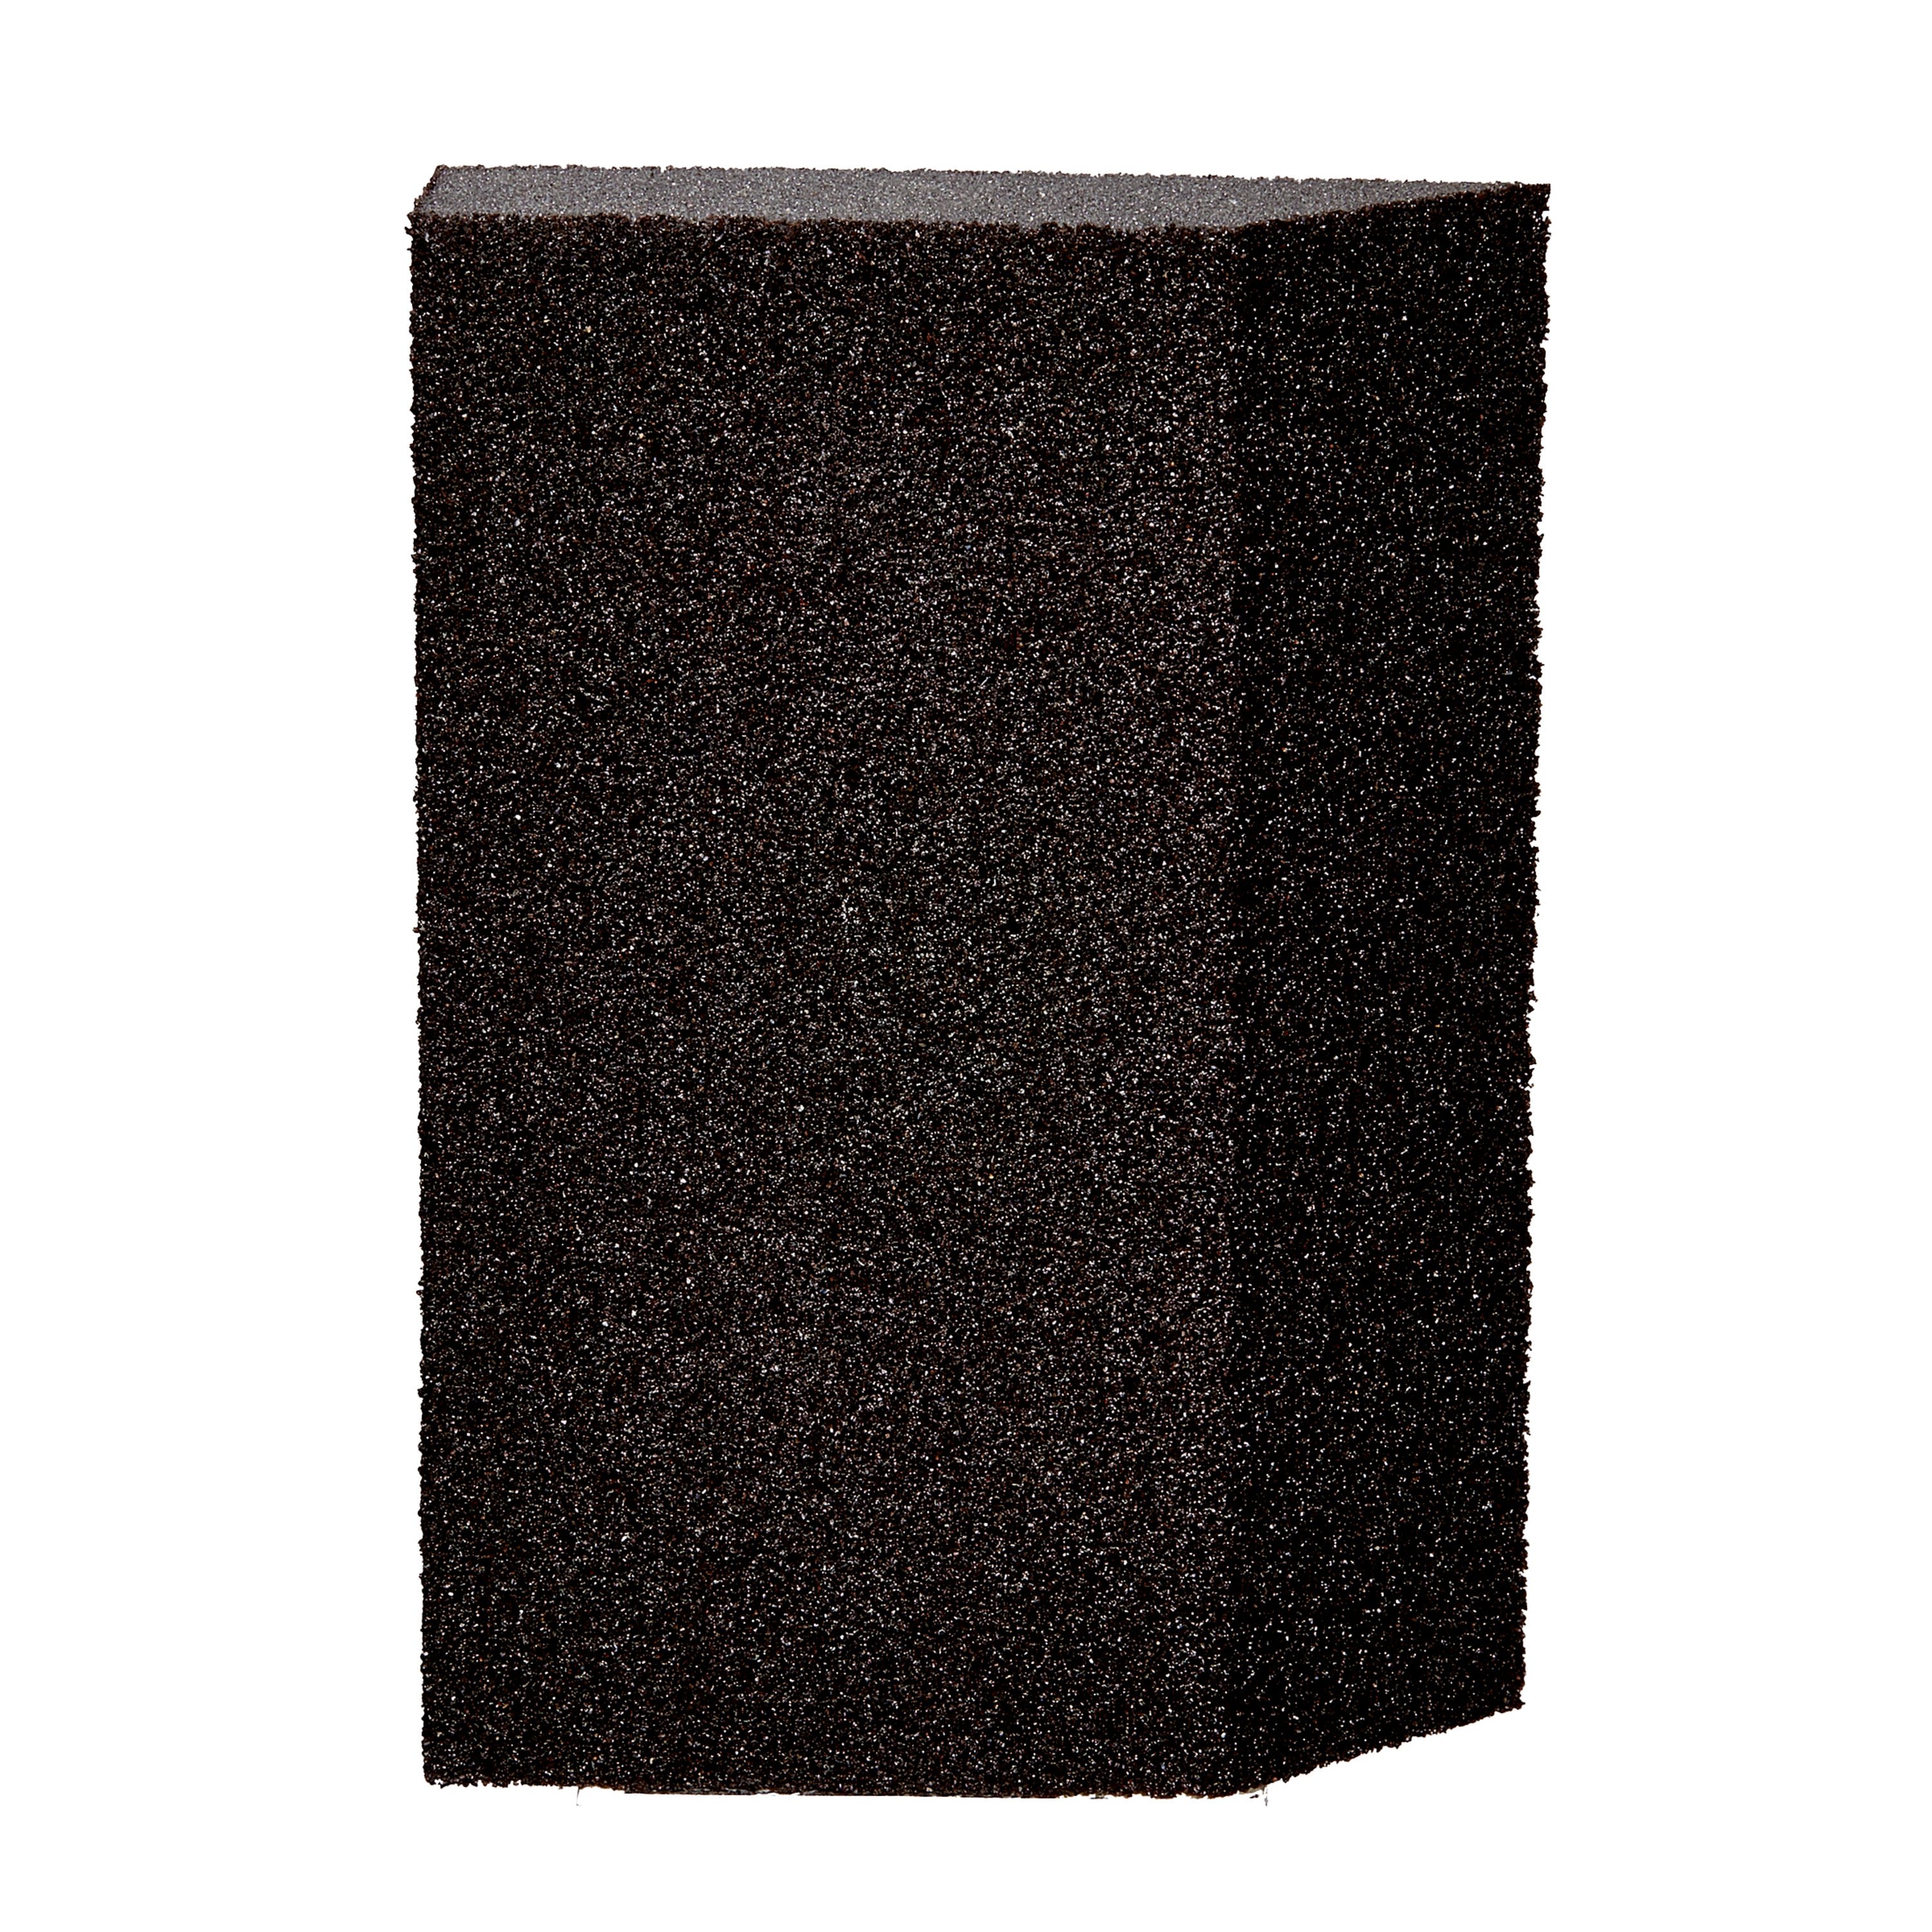 Sanding Sponge: 2-3/4 Wide, 12 Long, 1 Thick, Hard Grade